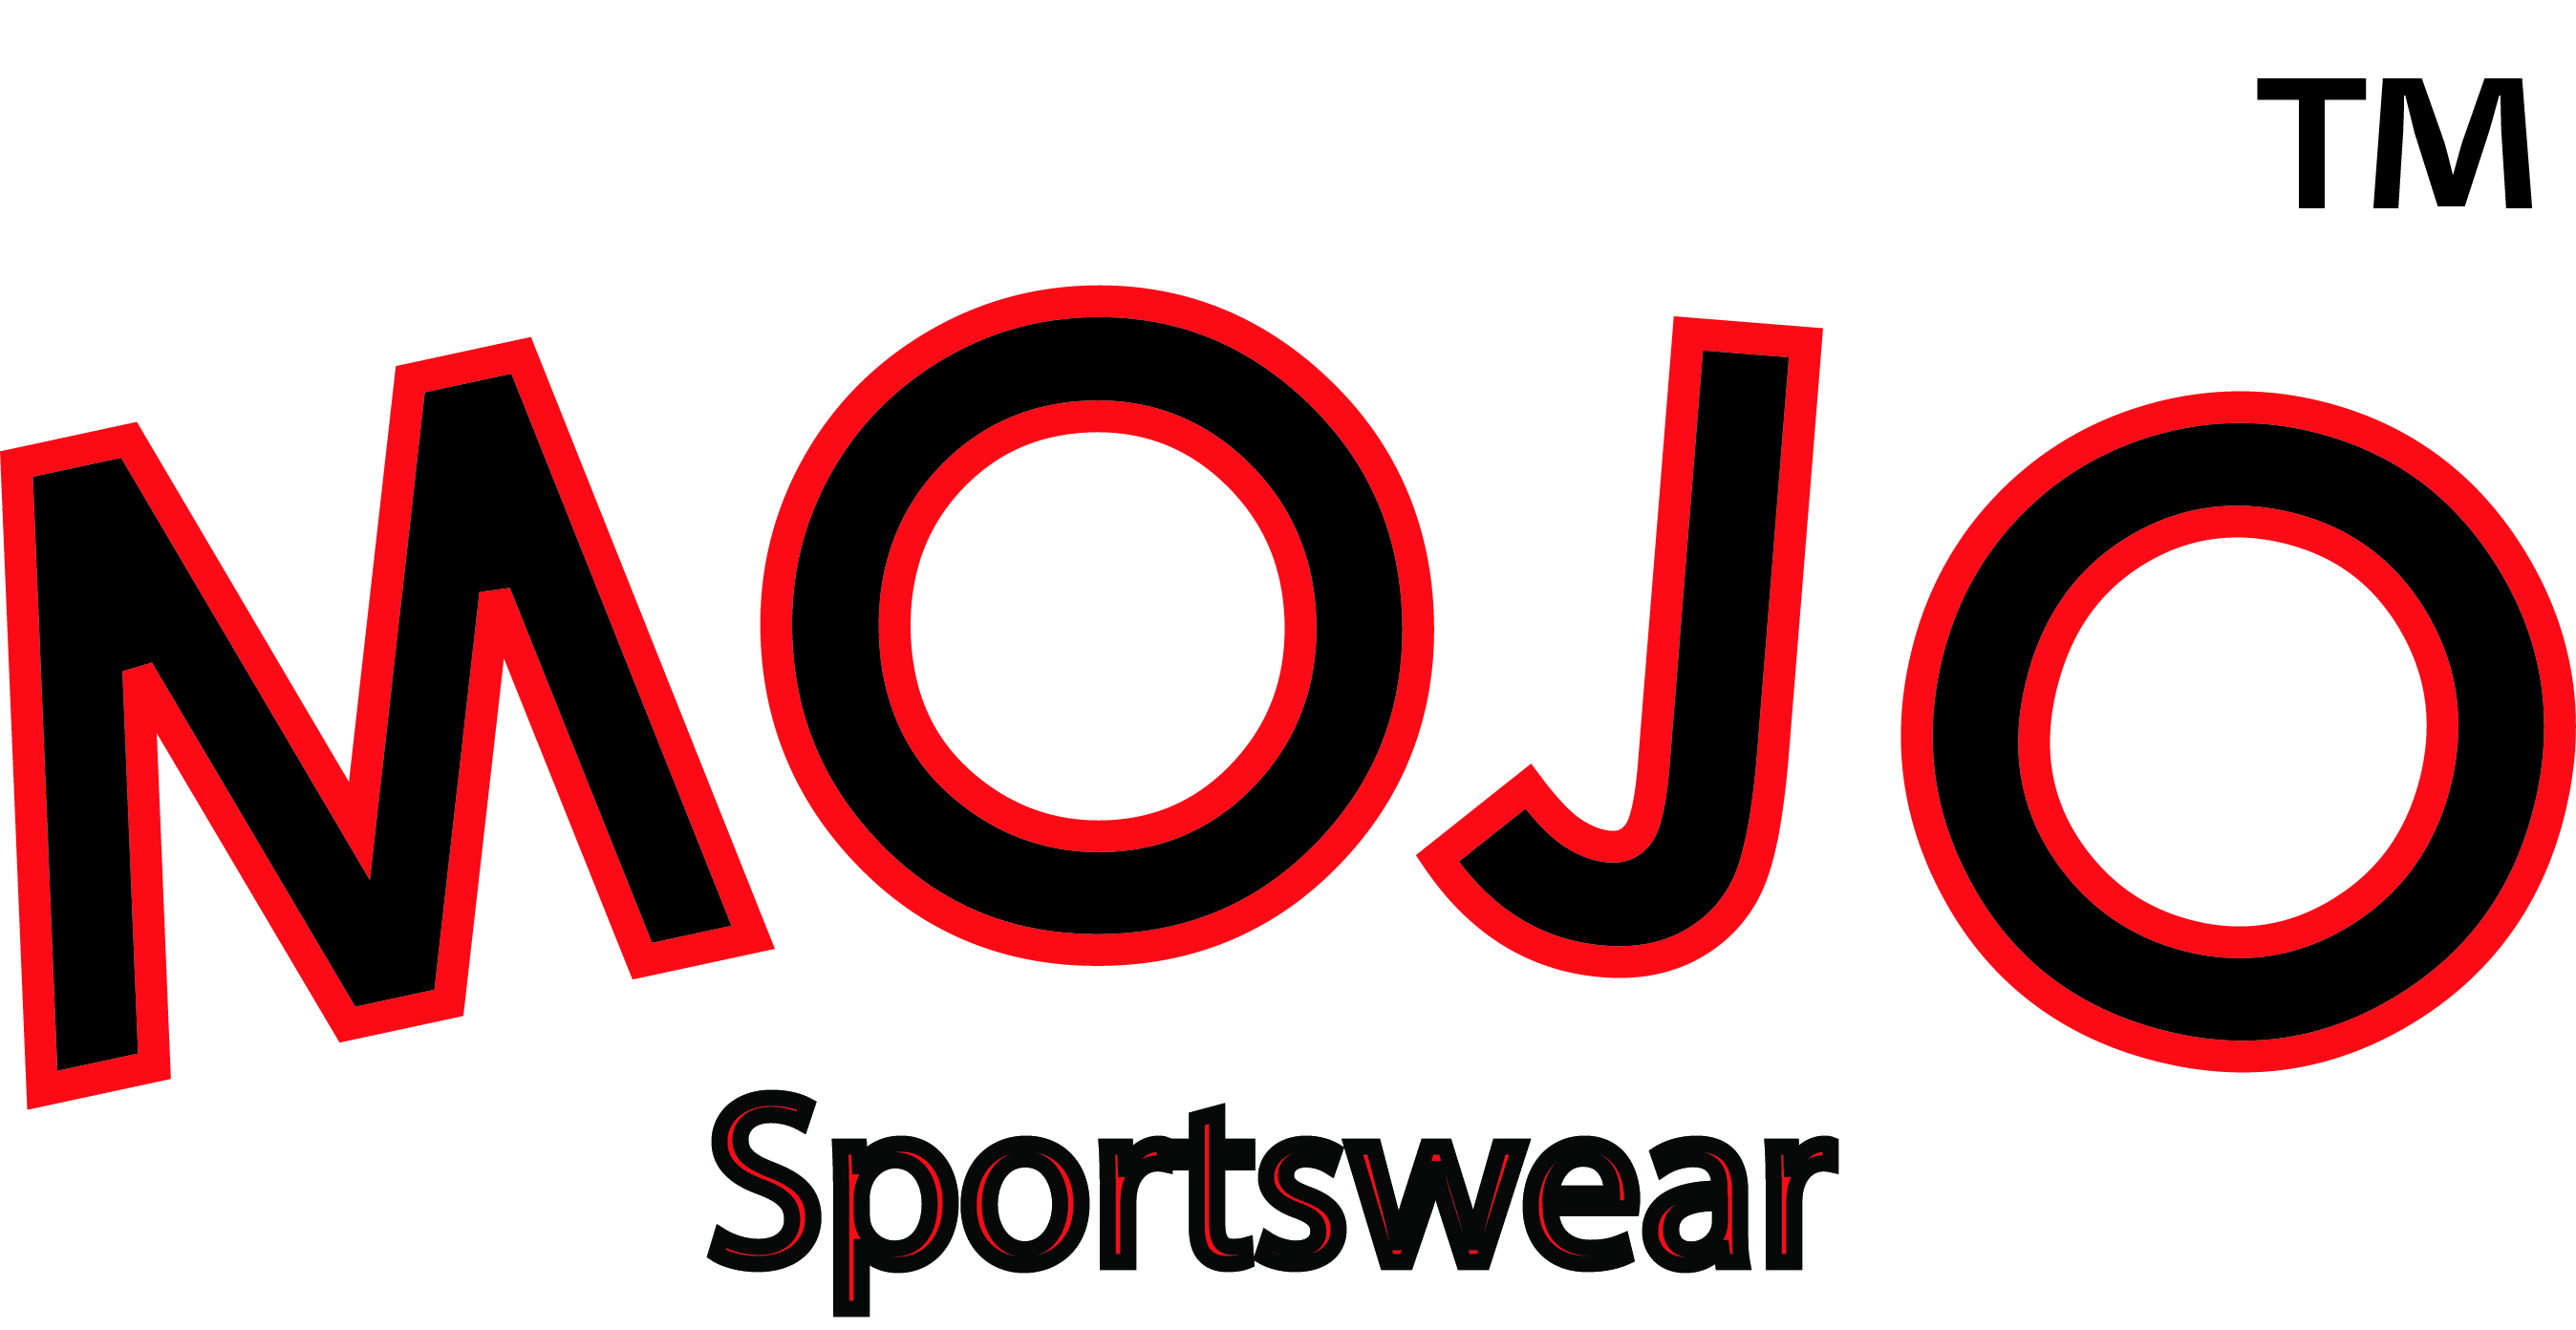 dc mojo - phat arc swap sport logo